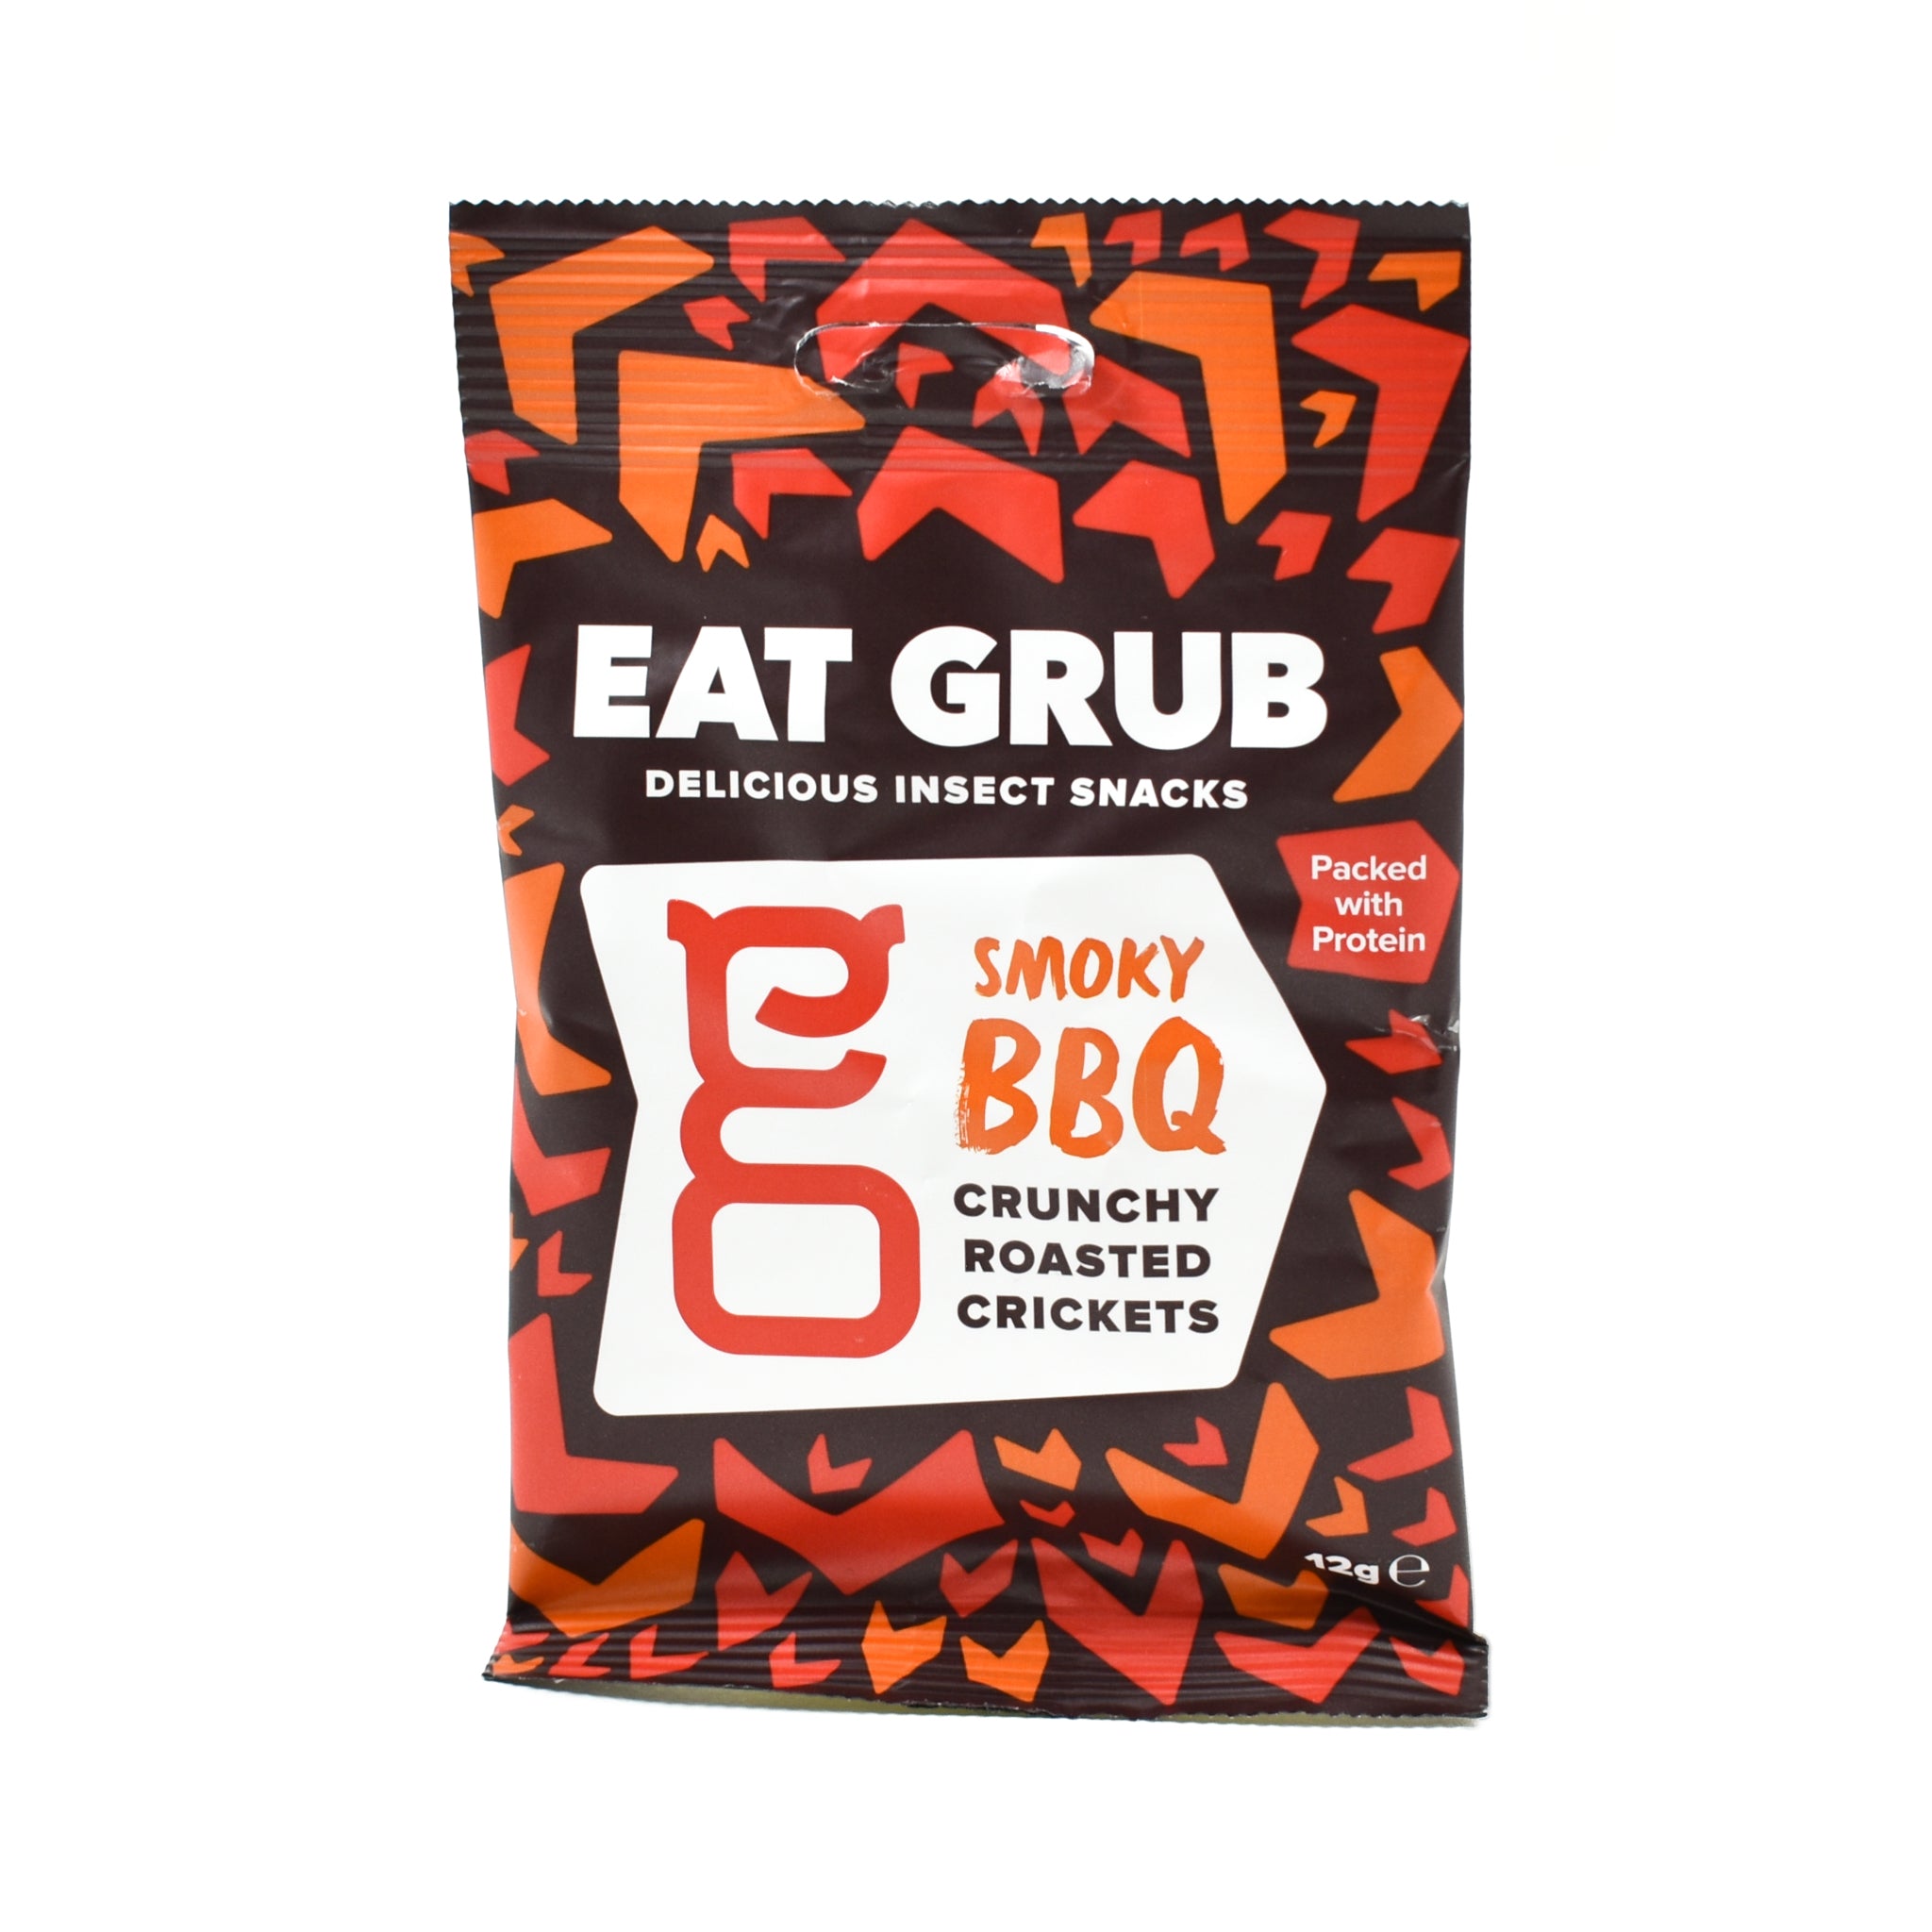 Eat Grub Smoky BBQ Crunchy Roasted Crickets 12g Ingredients Savoury Snacks & Crackers